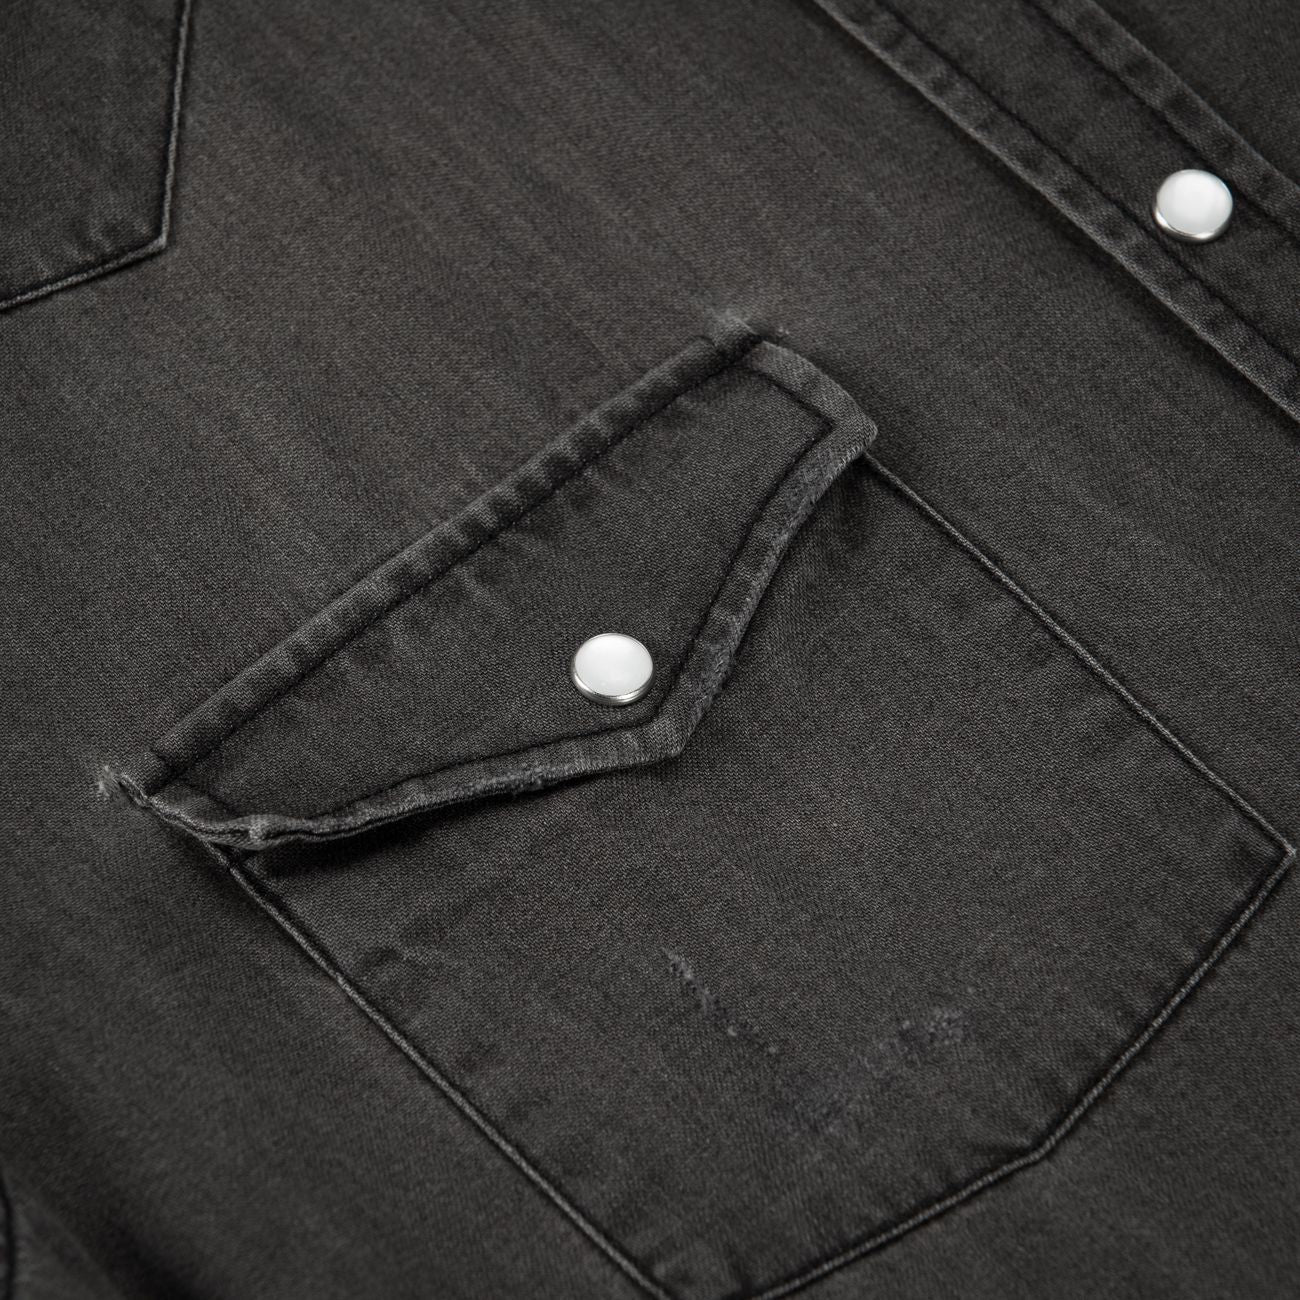 Texas Shirt Black Washed-Skjorte-The Gilli-Phrase